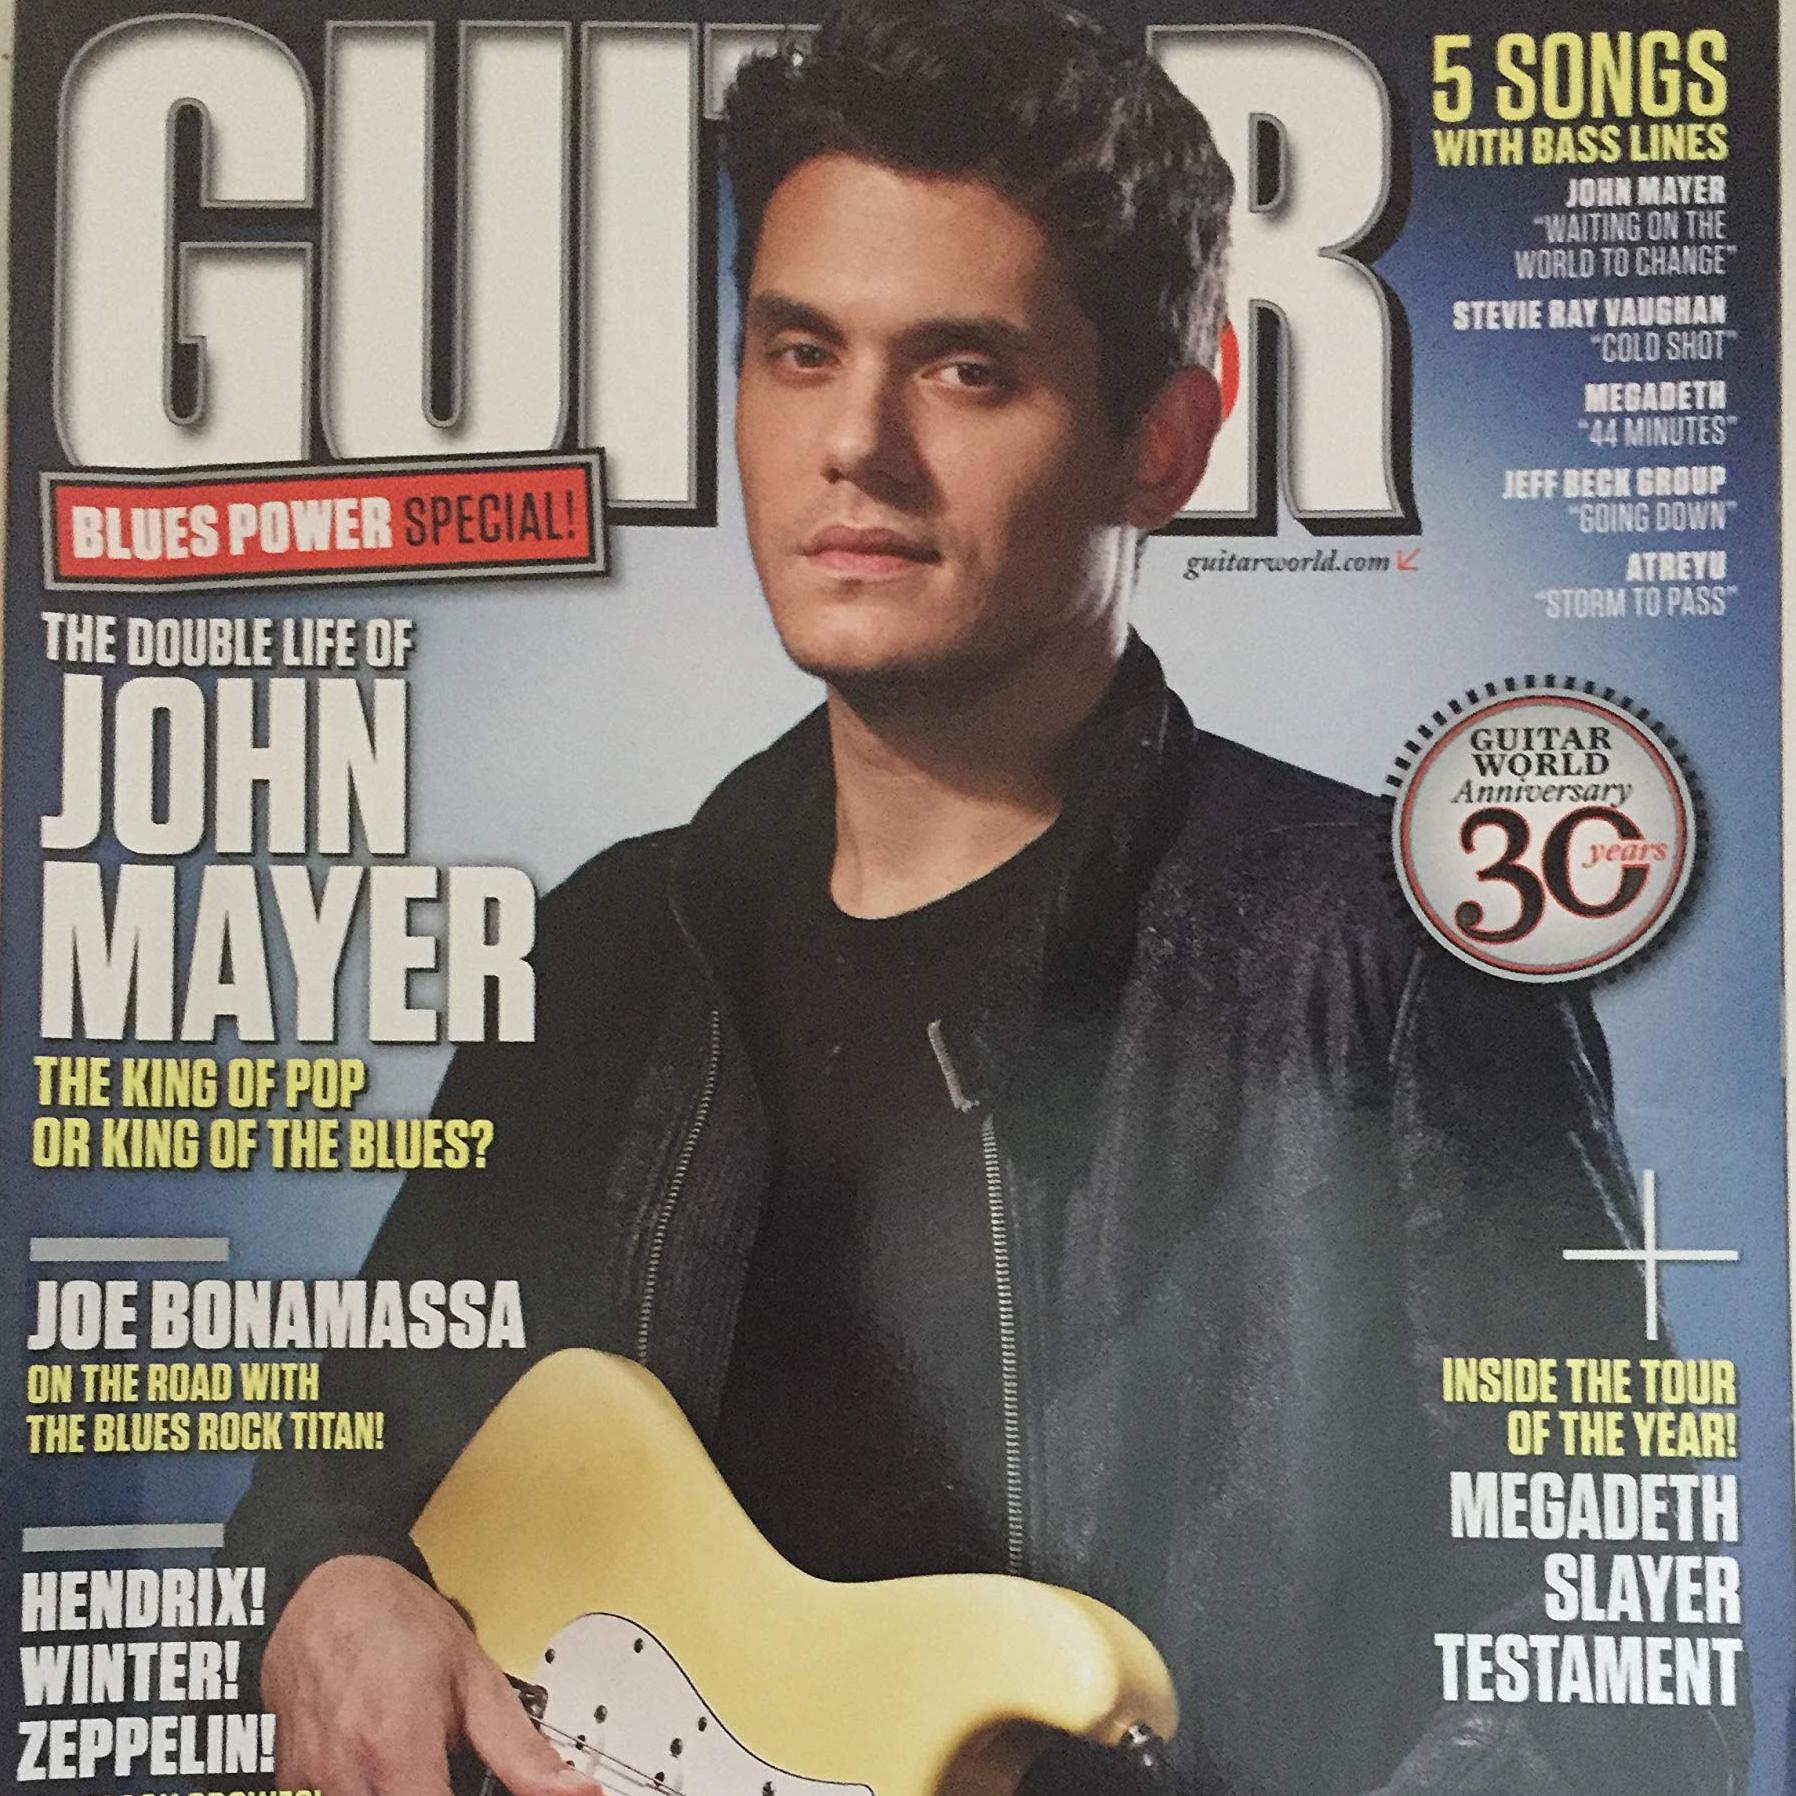 Guitar World February 2010 cover.